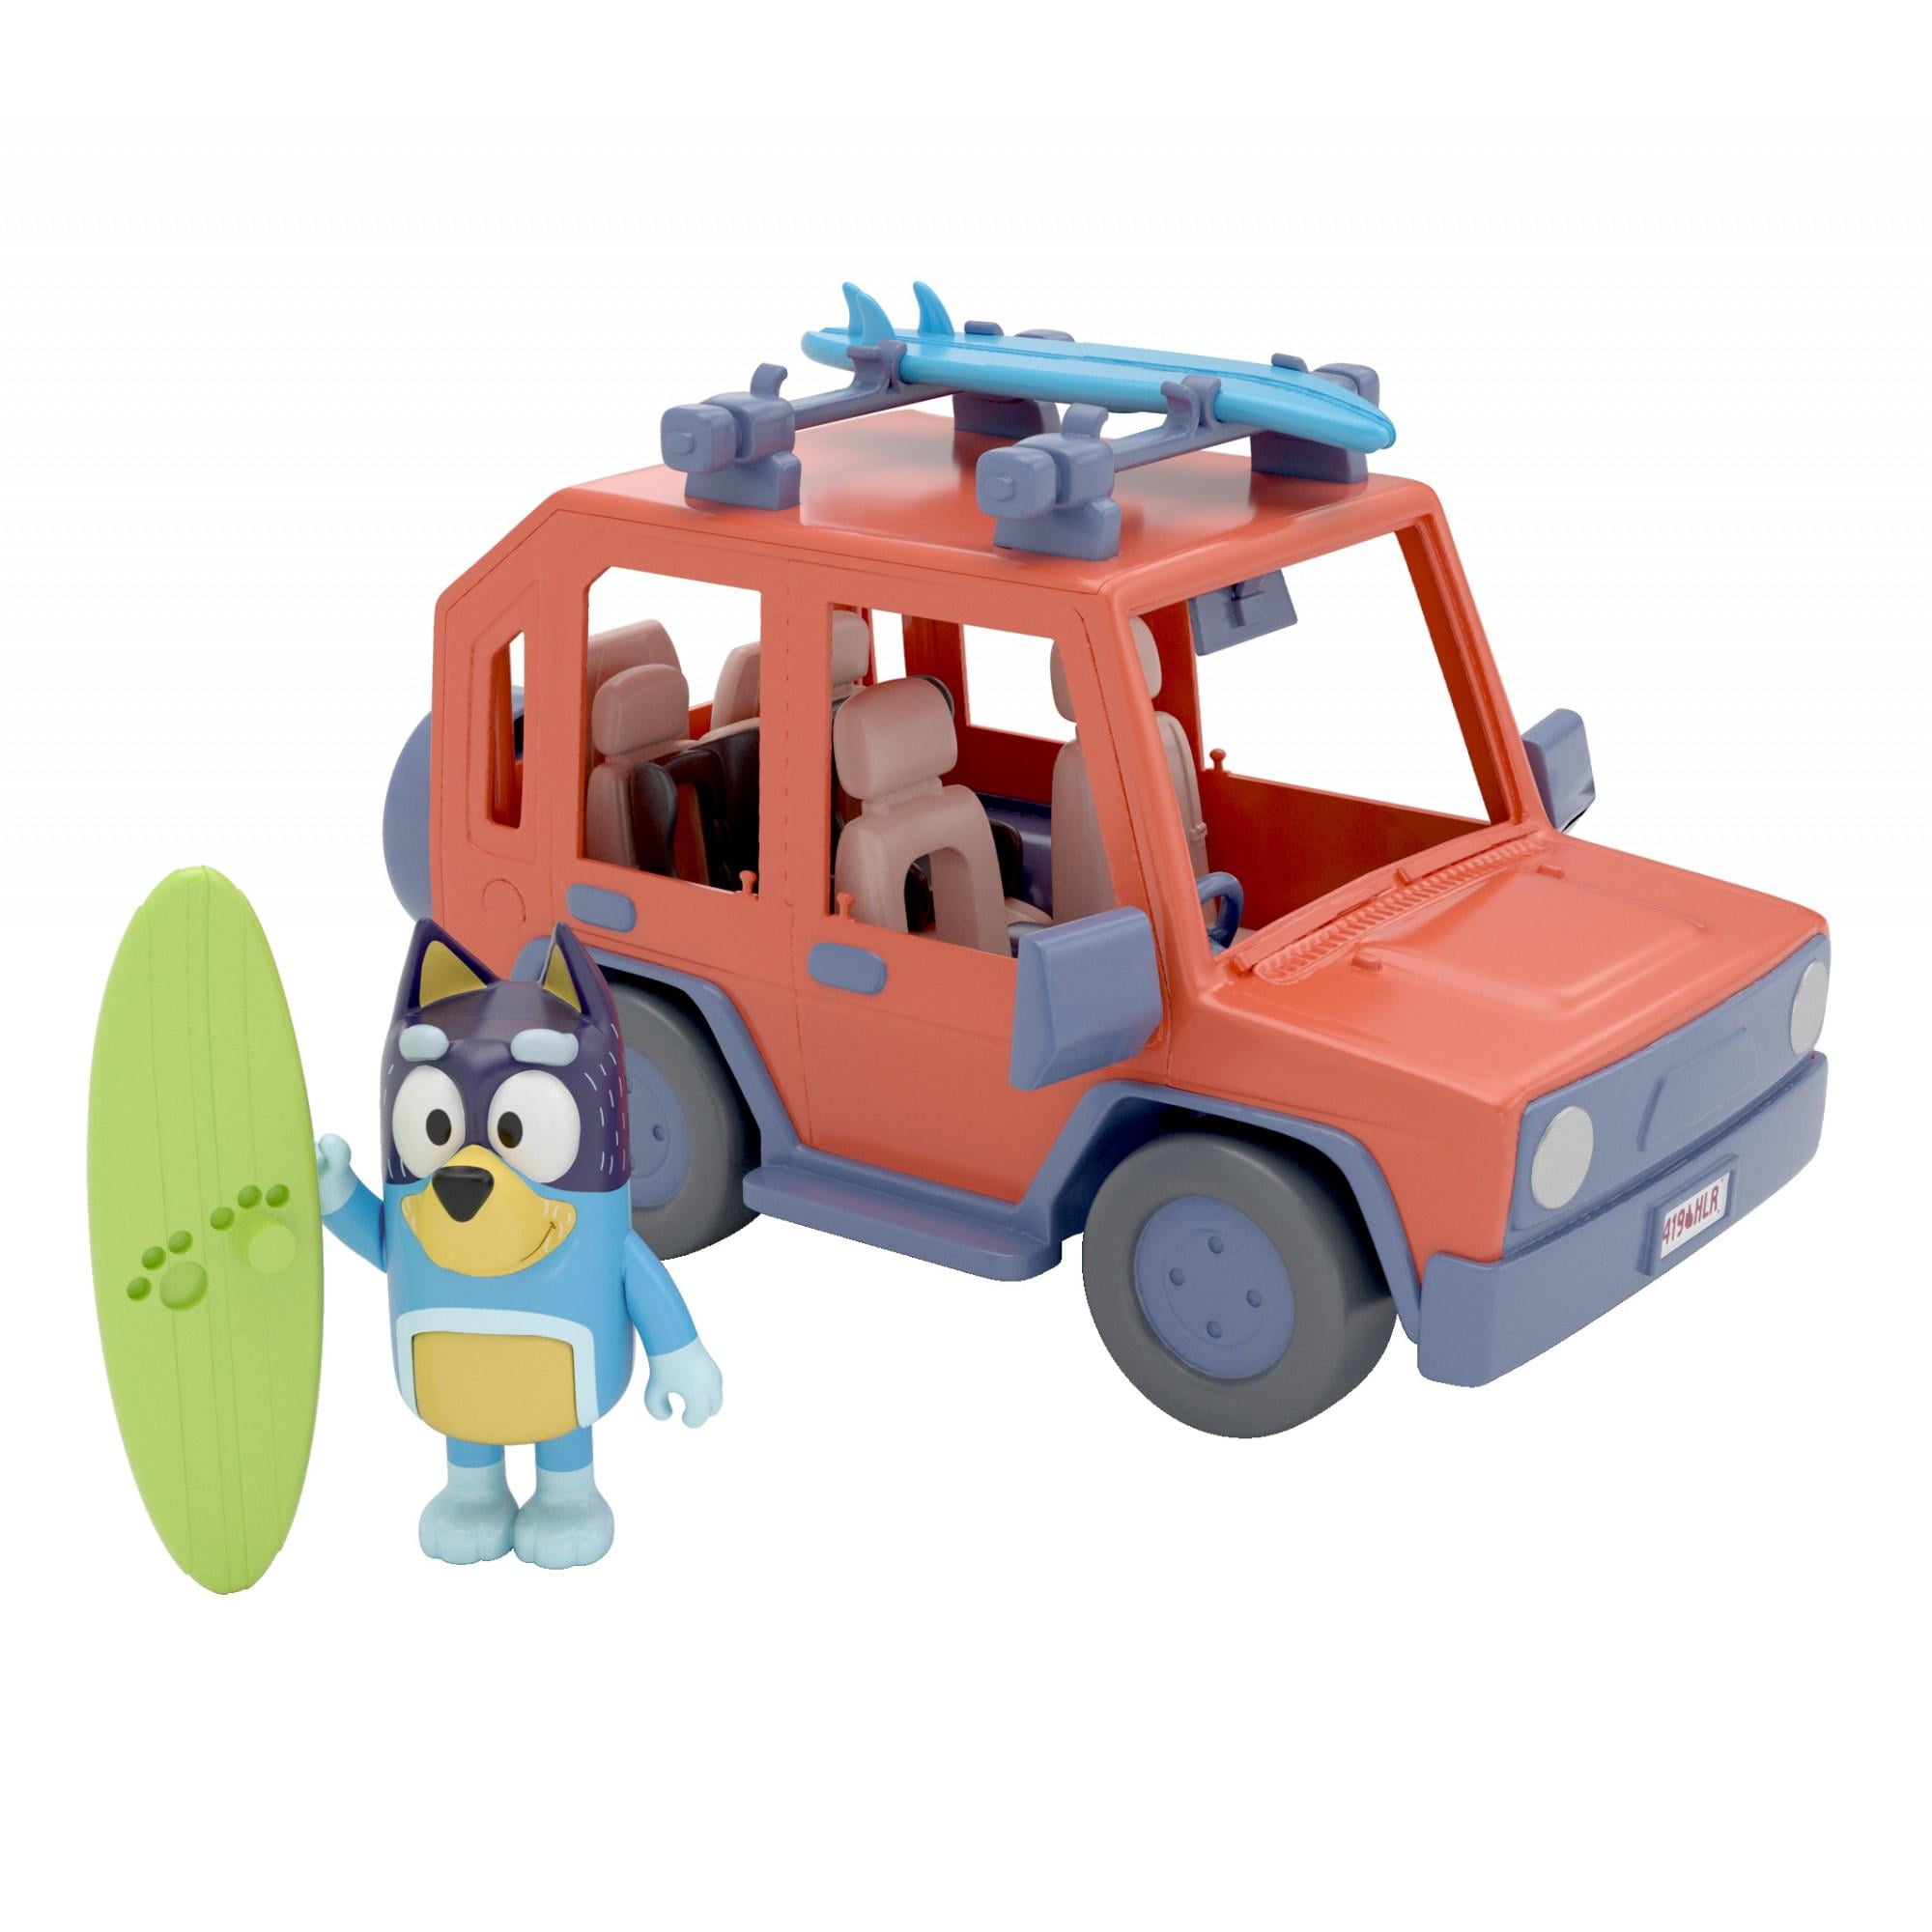 Bluey Family 4-Pack Figure Set for sale online 